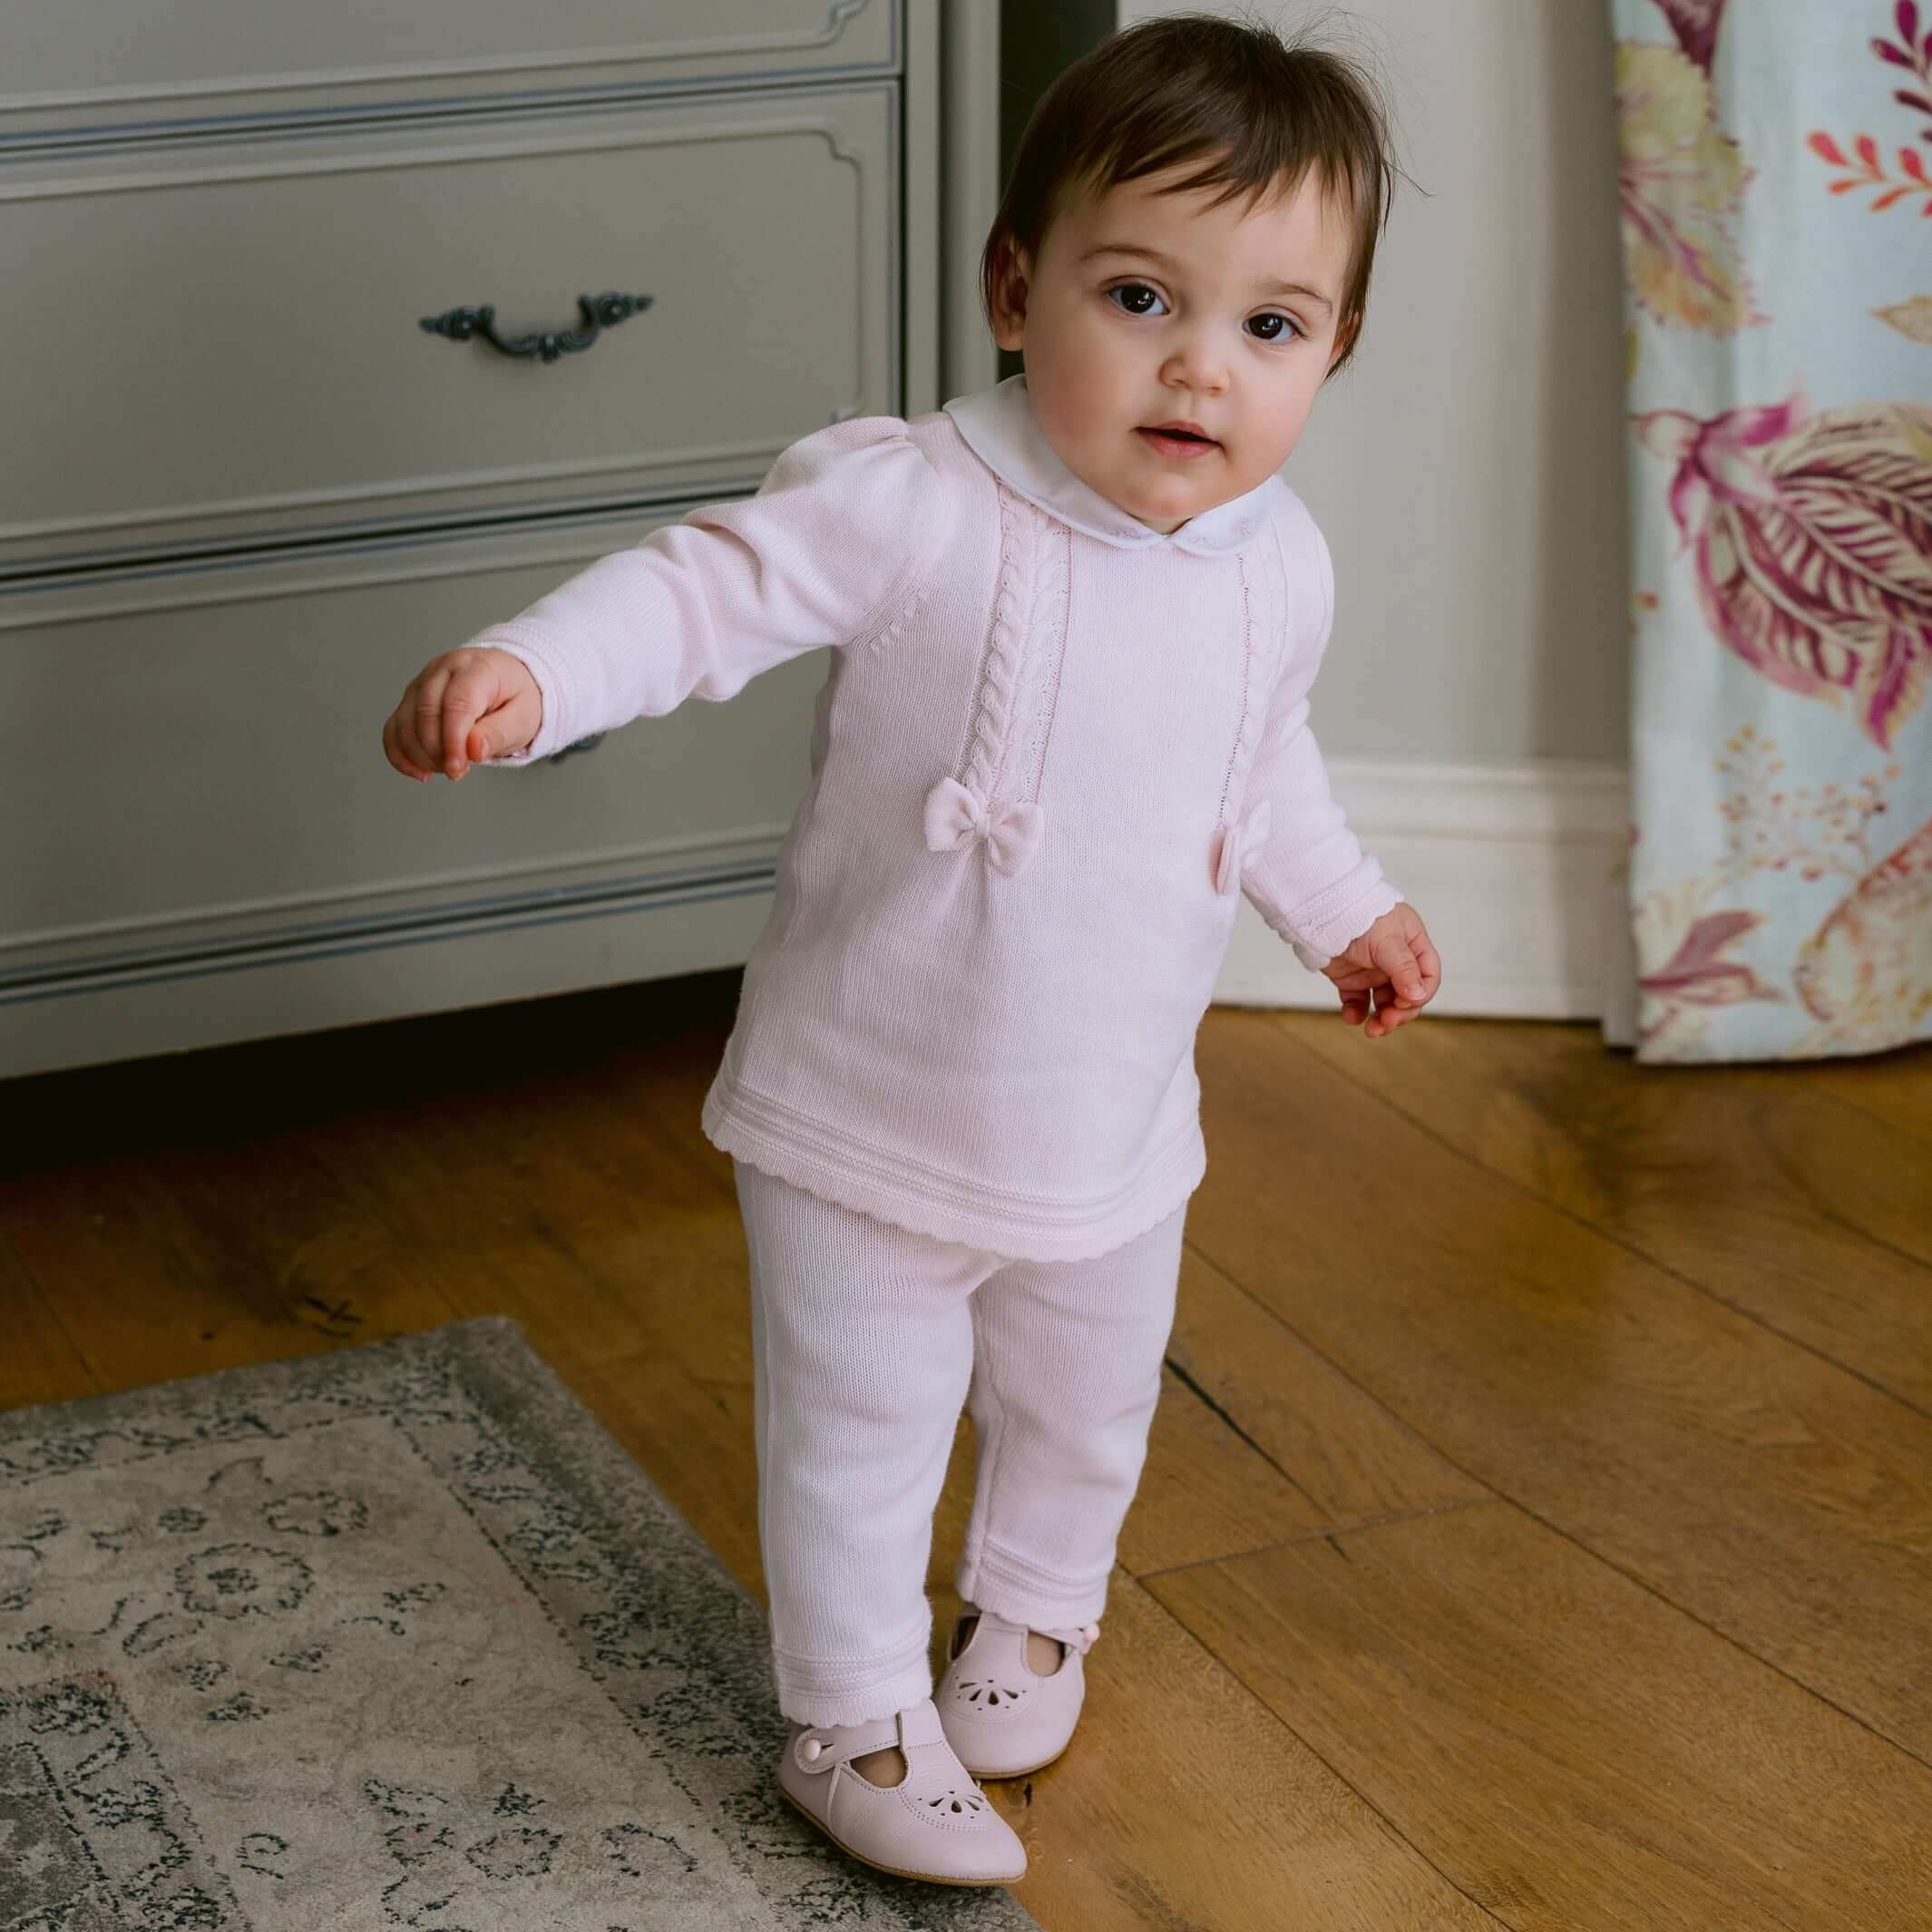 Emile Et Rose Baby Girls Pink Emilia Knitted Set